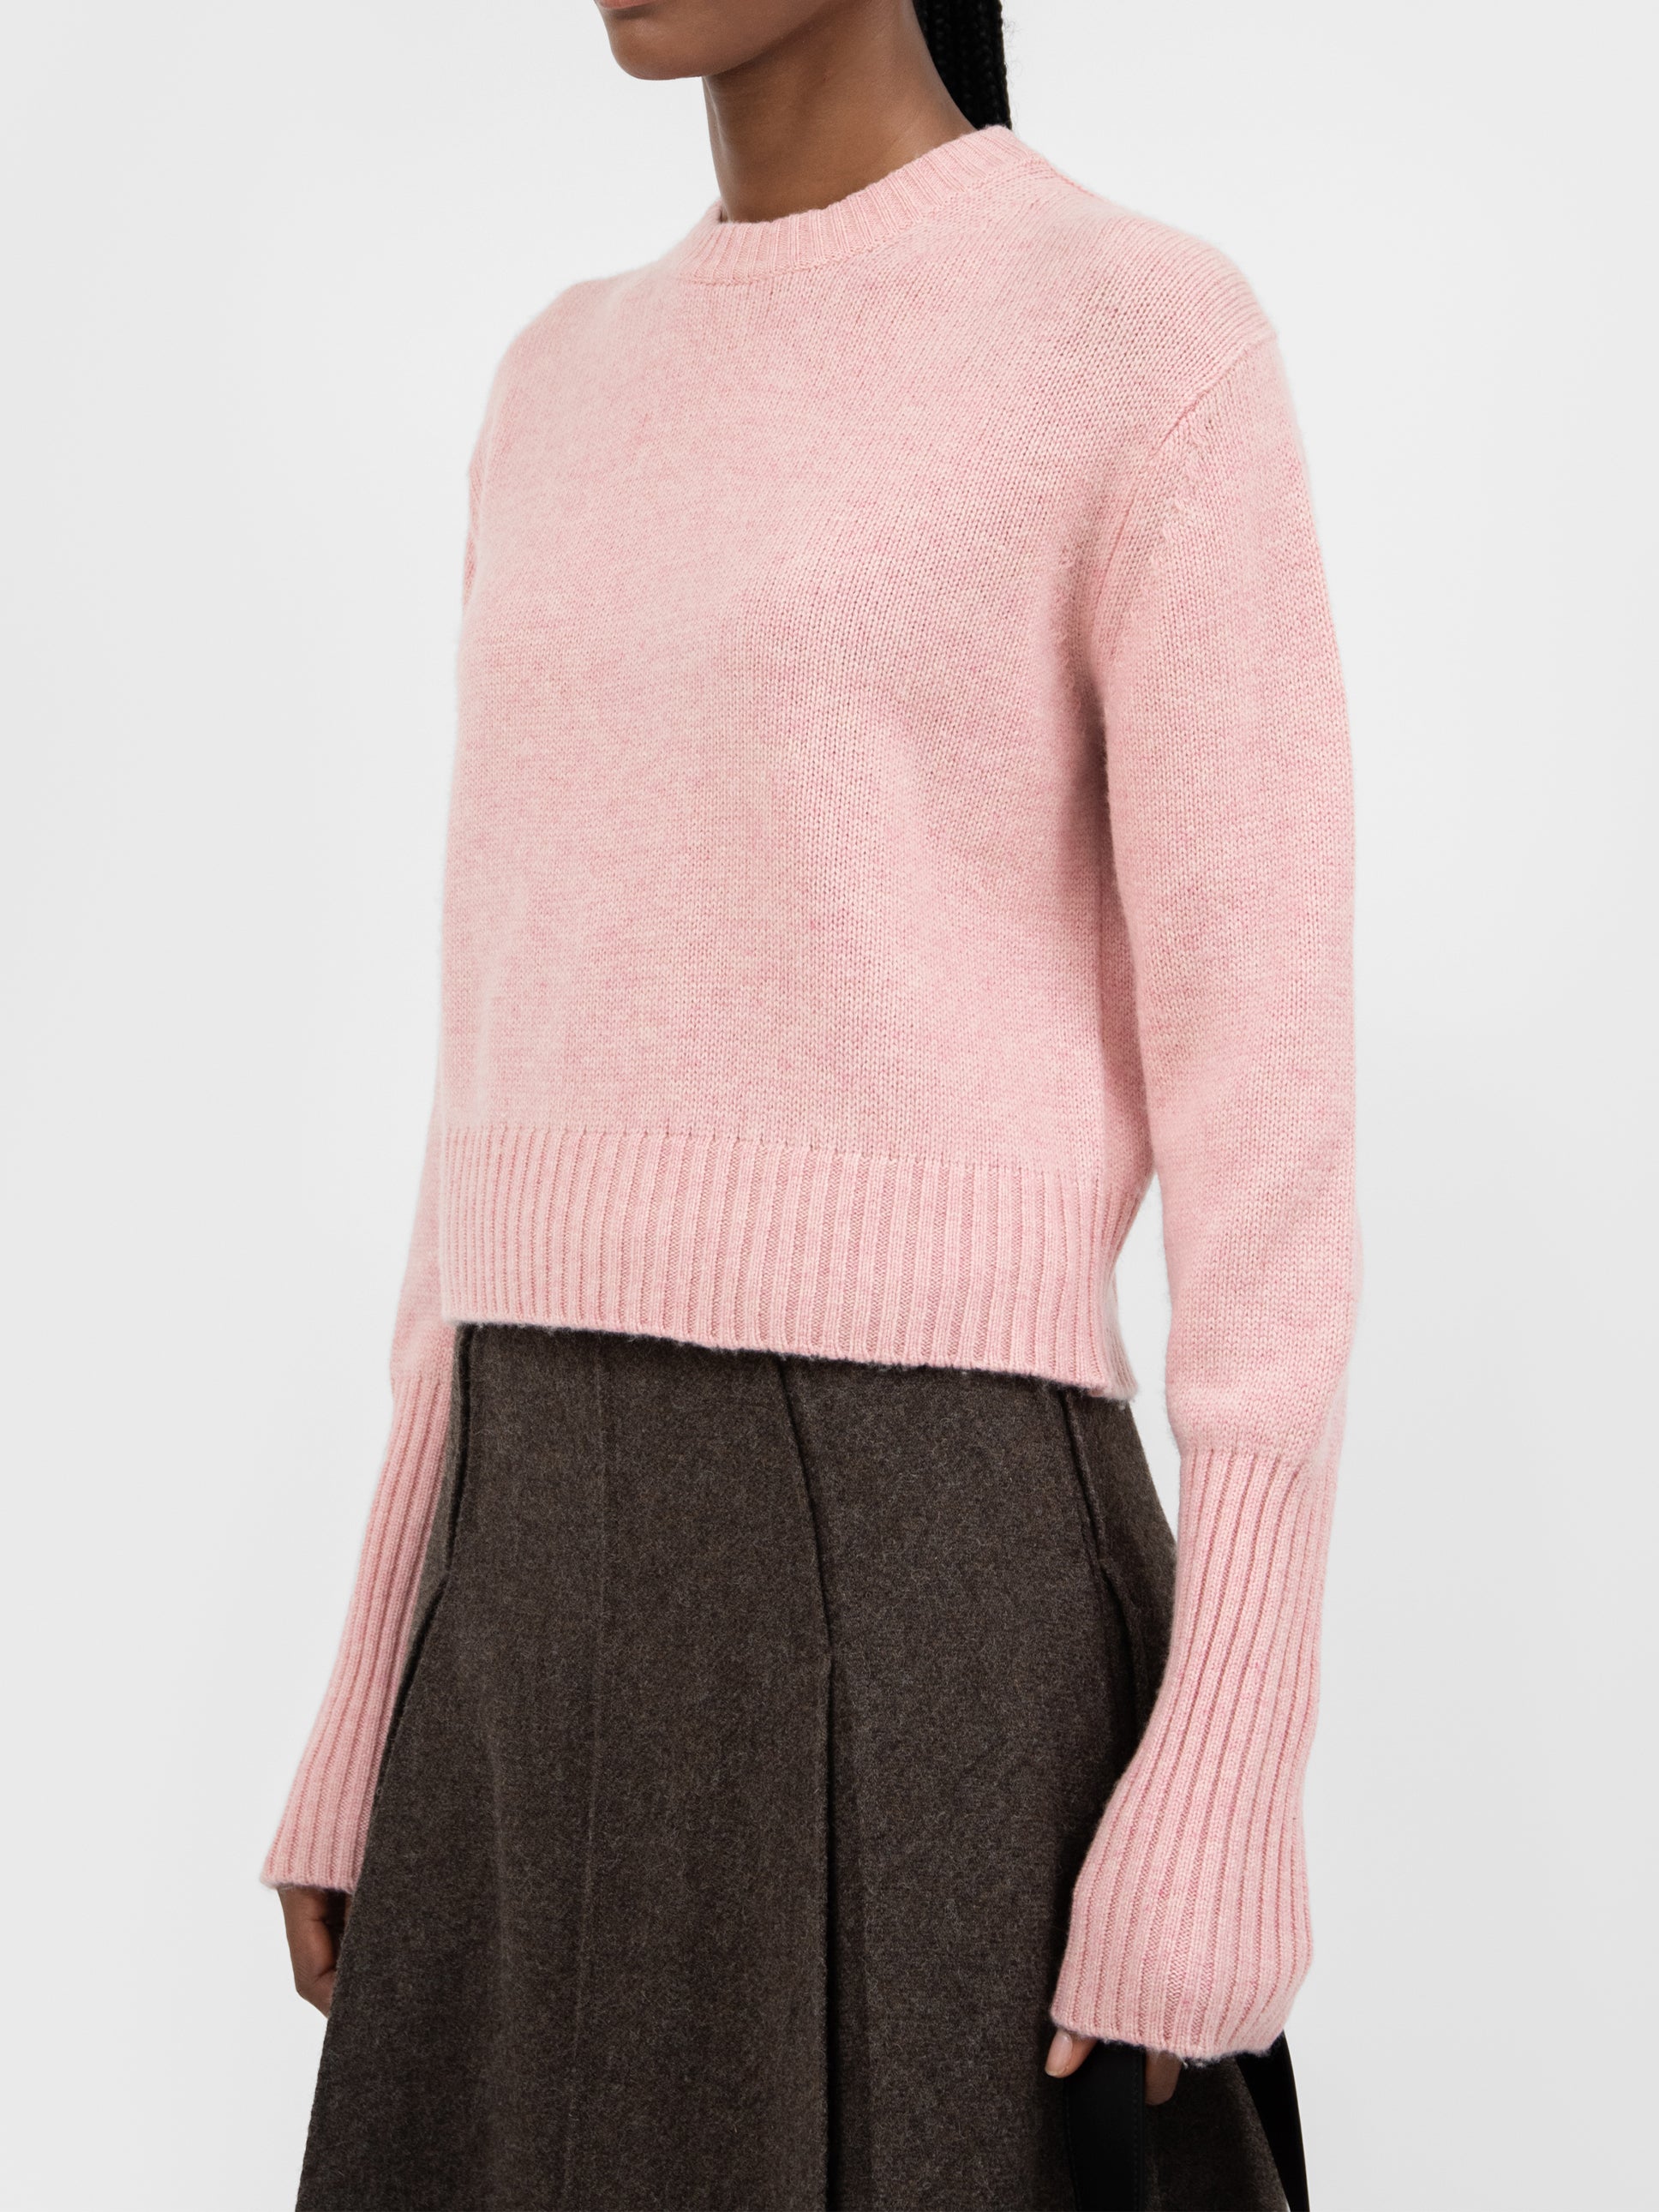 Goodall Wool Cashmere Blend Knit Top Peach Pink